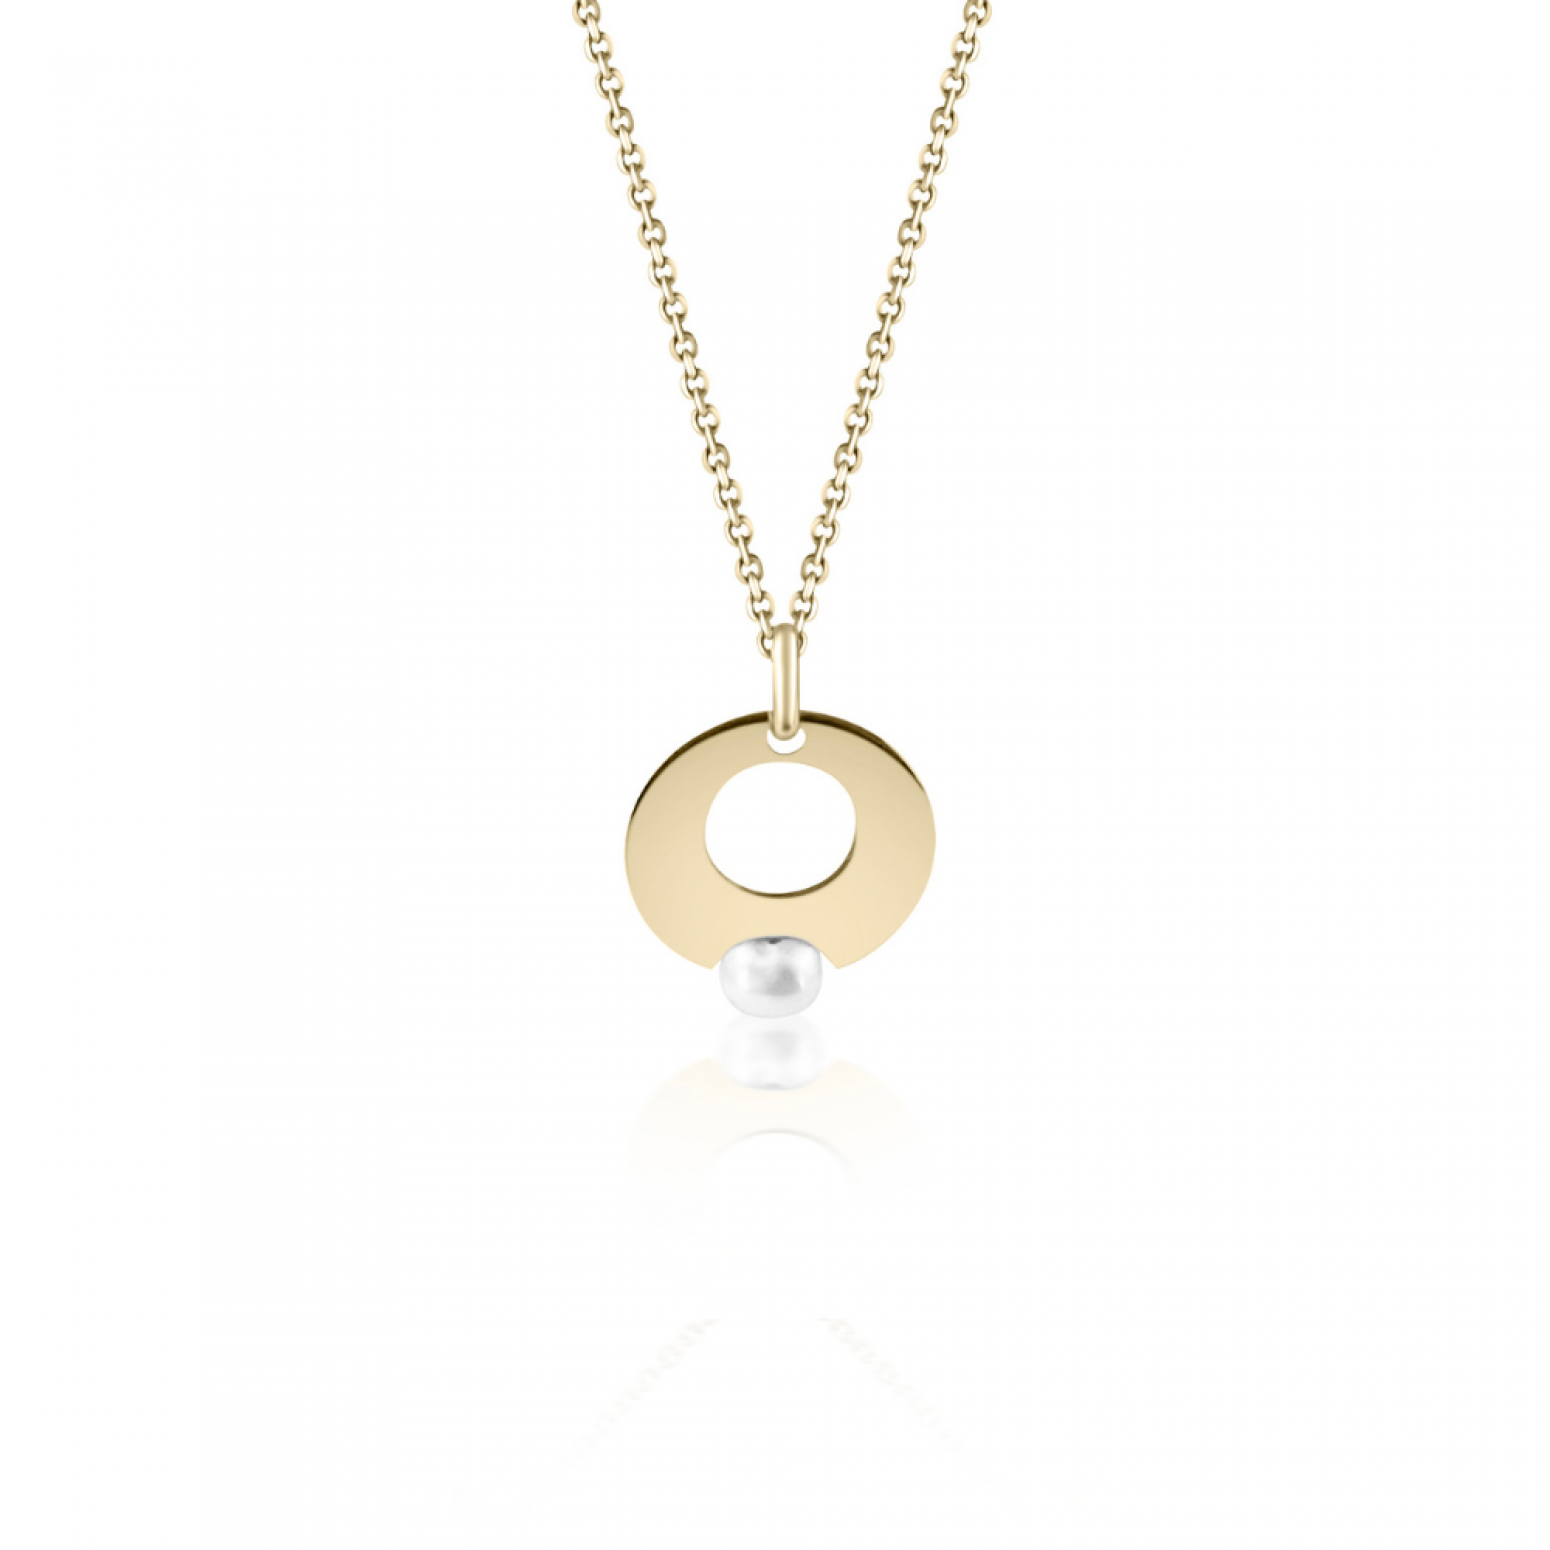 Round necklace, Κ14 gold with pearl ko5932 NECKLACES Κοσμηματα - chrilia.gr